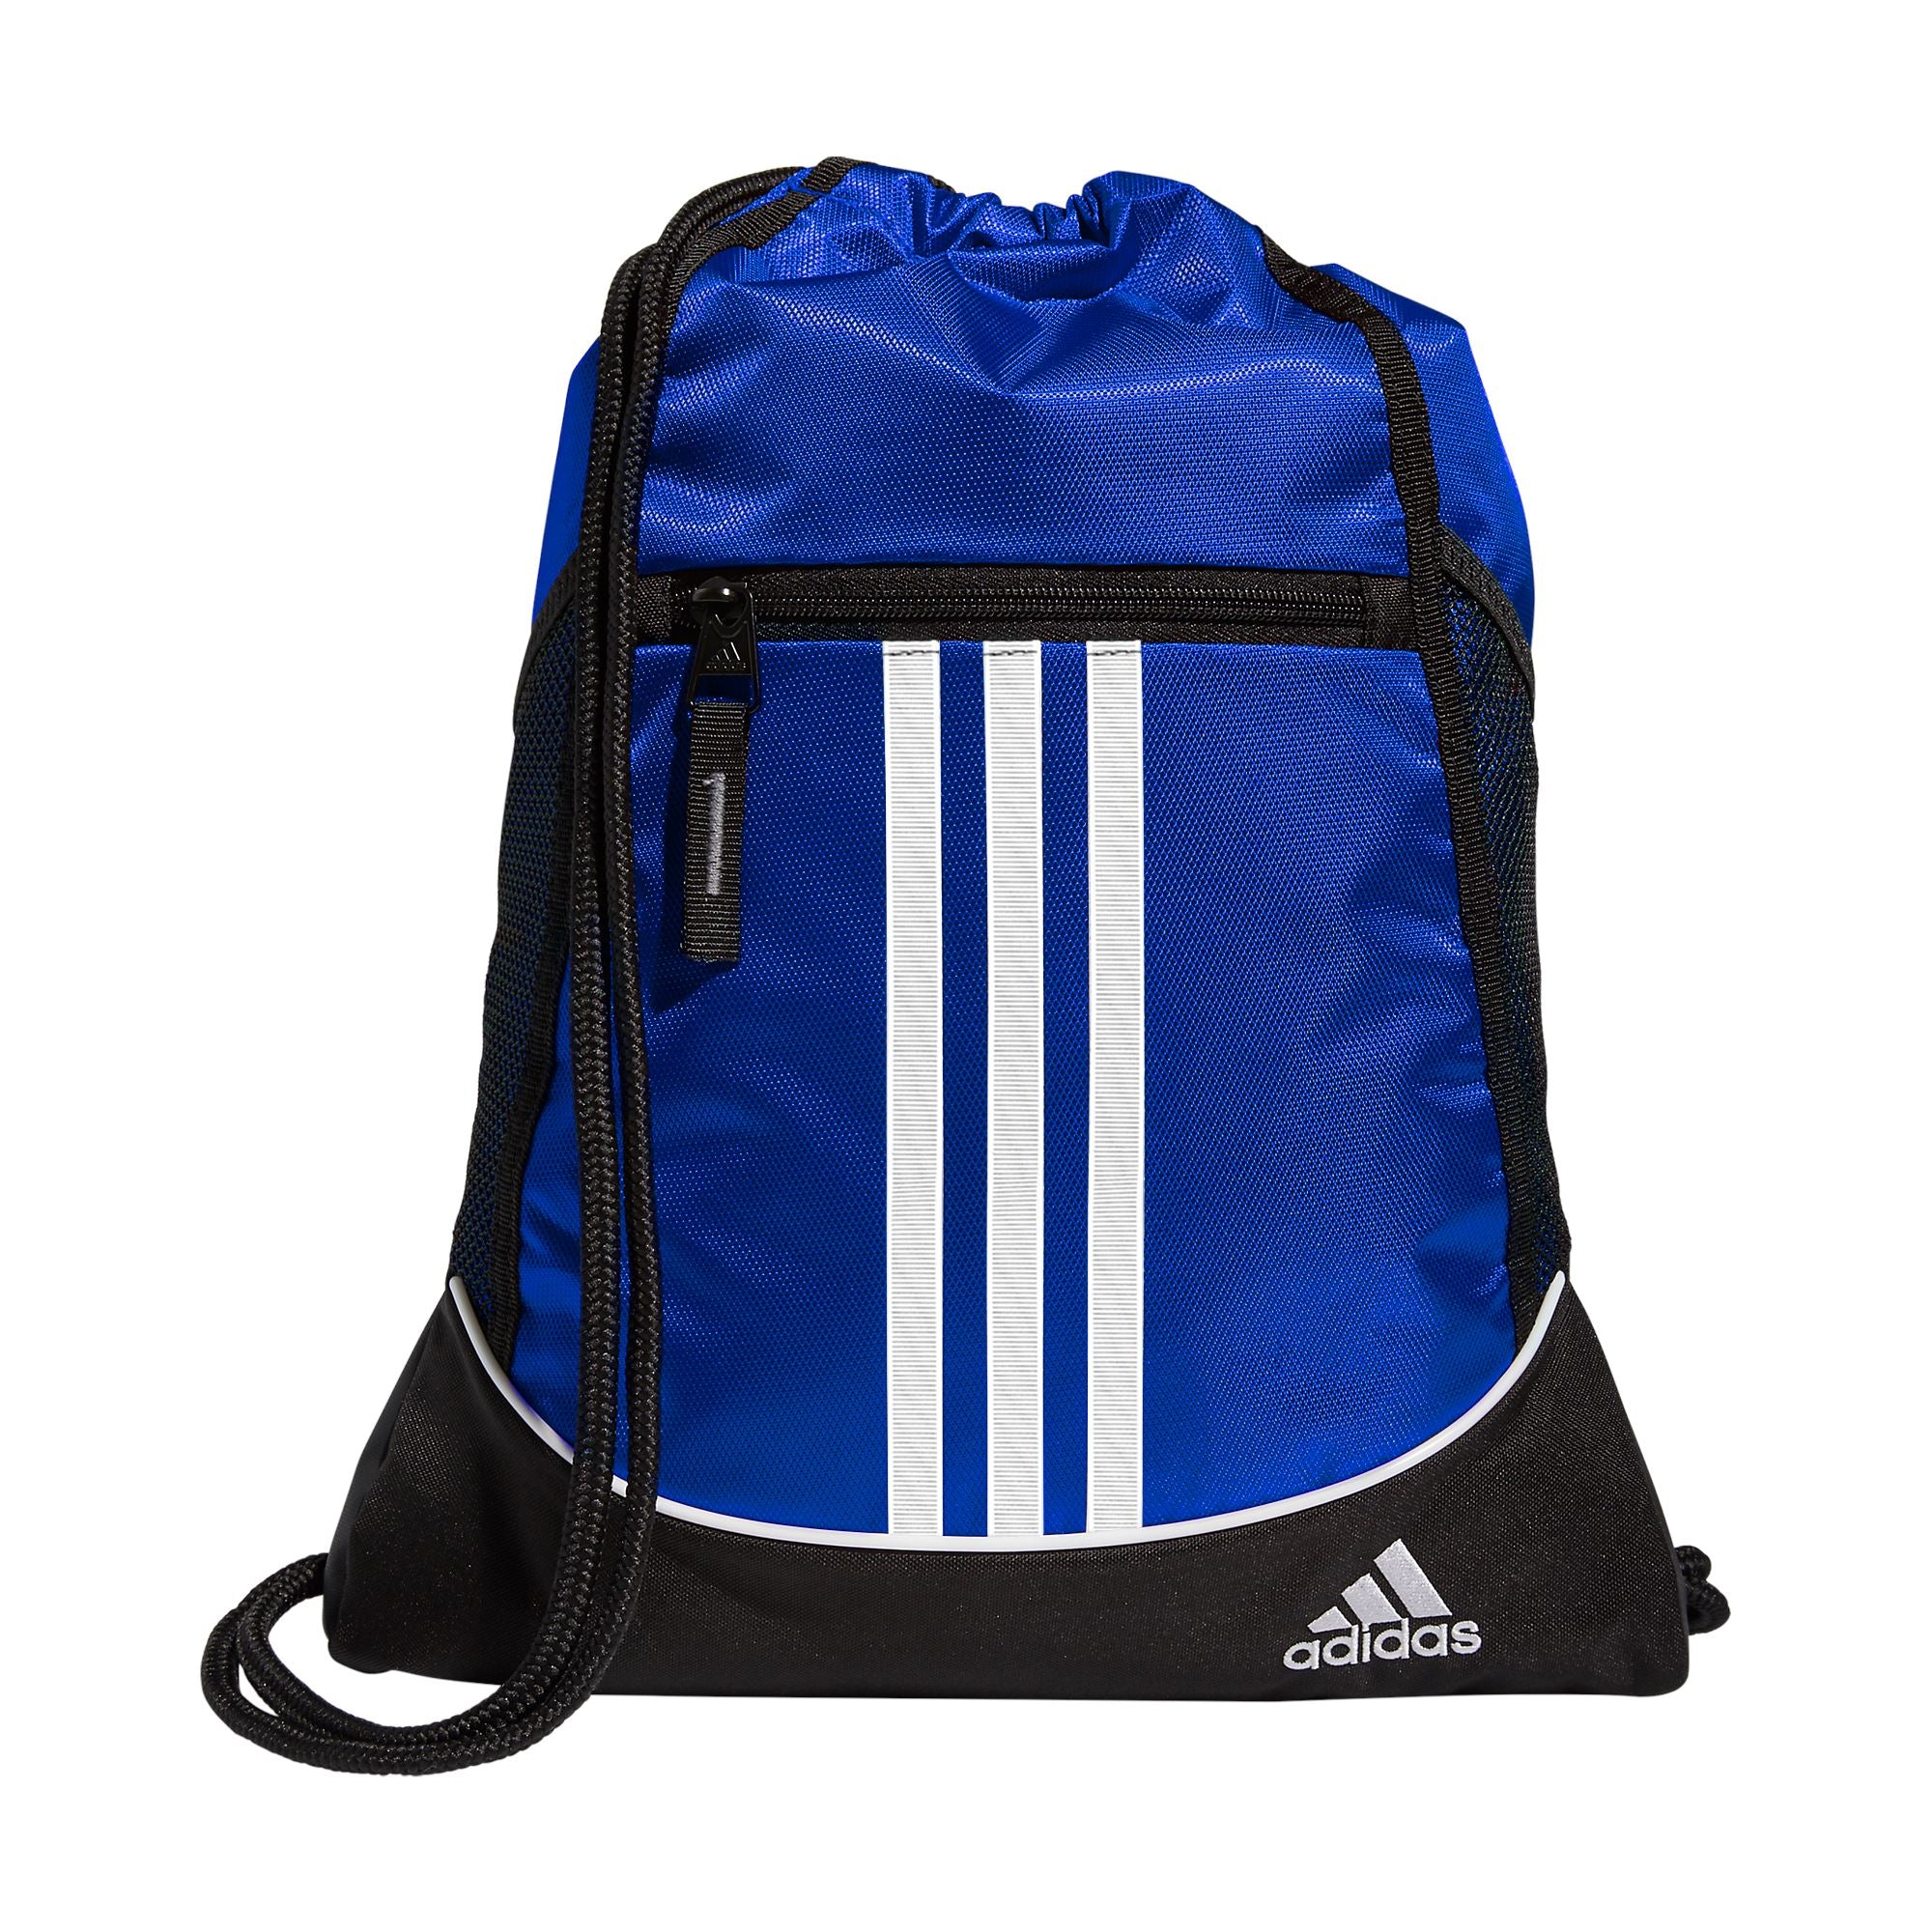 Adidas Alliance II Sackpack Team Royal Blue